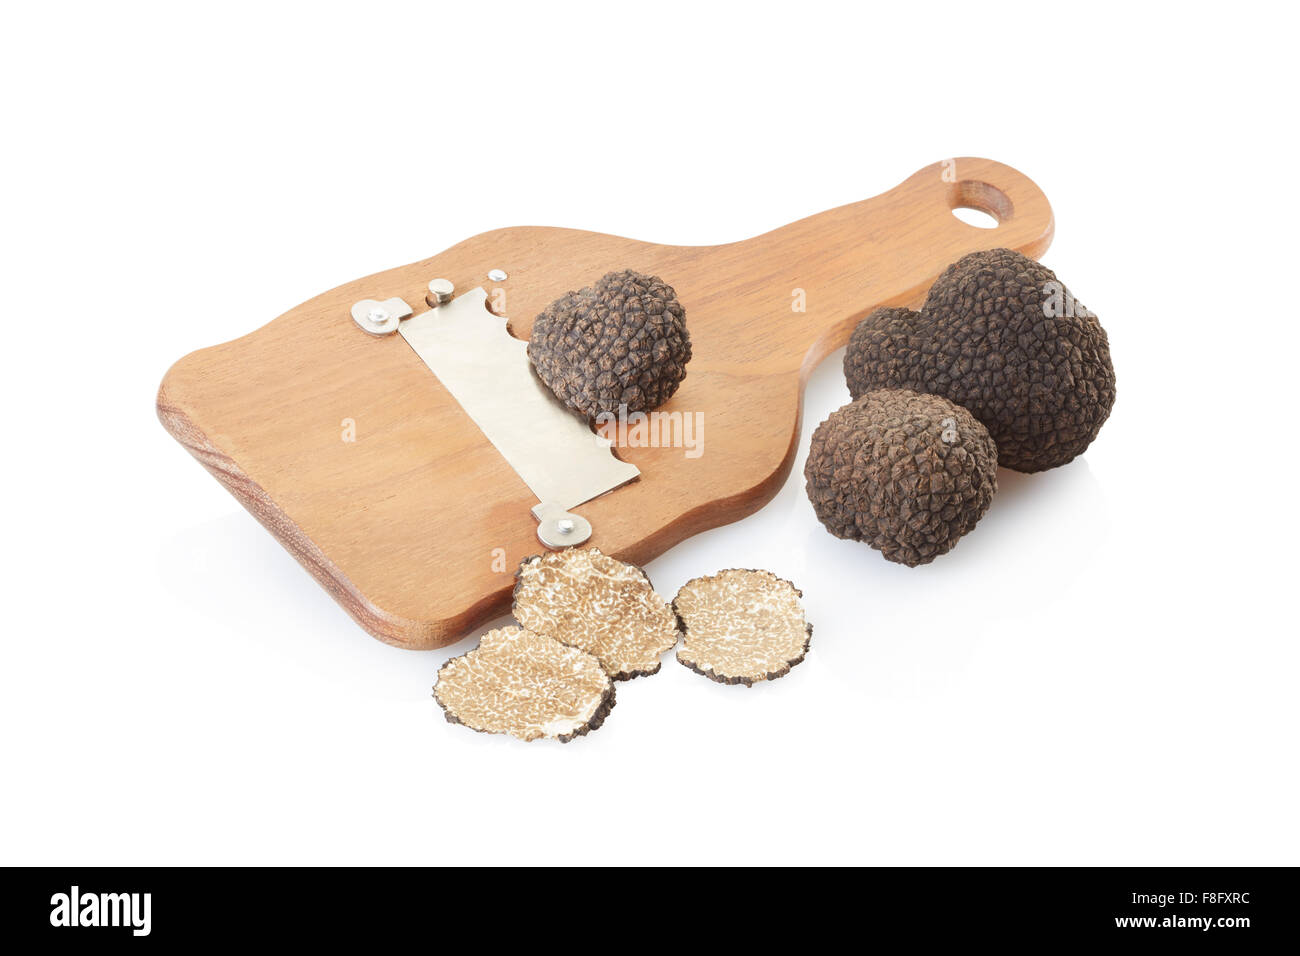 Black truffles, slices and wooden truffle slicer on white Stock Photo